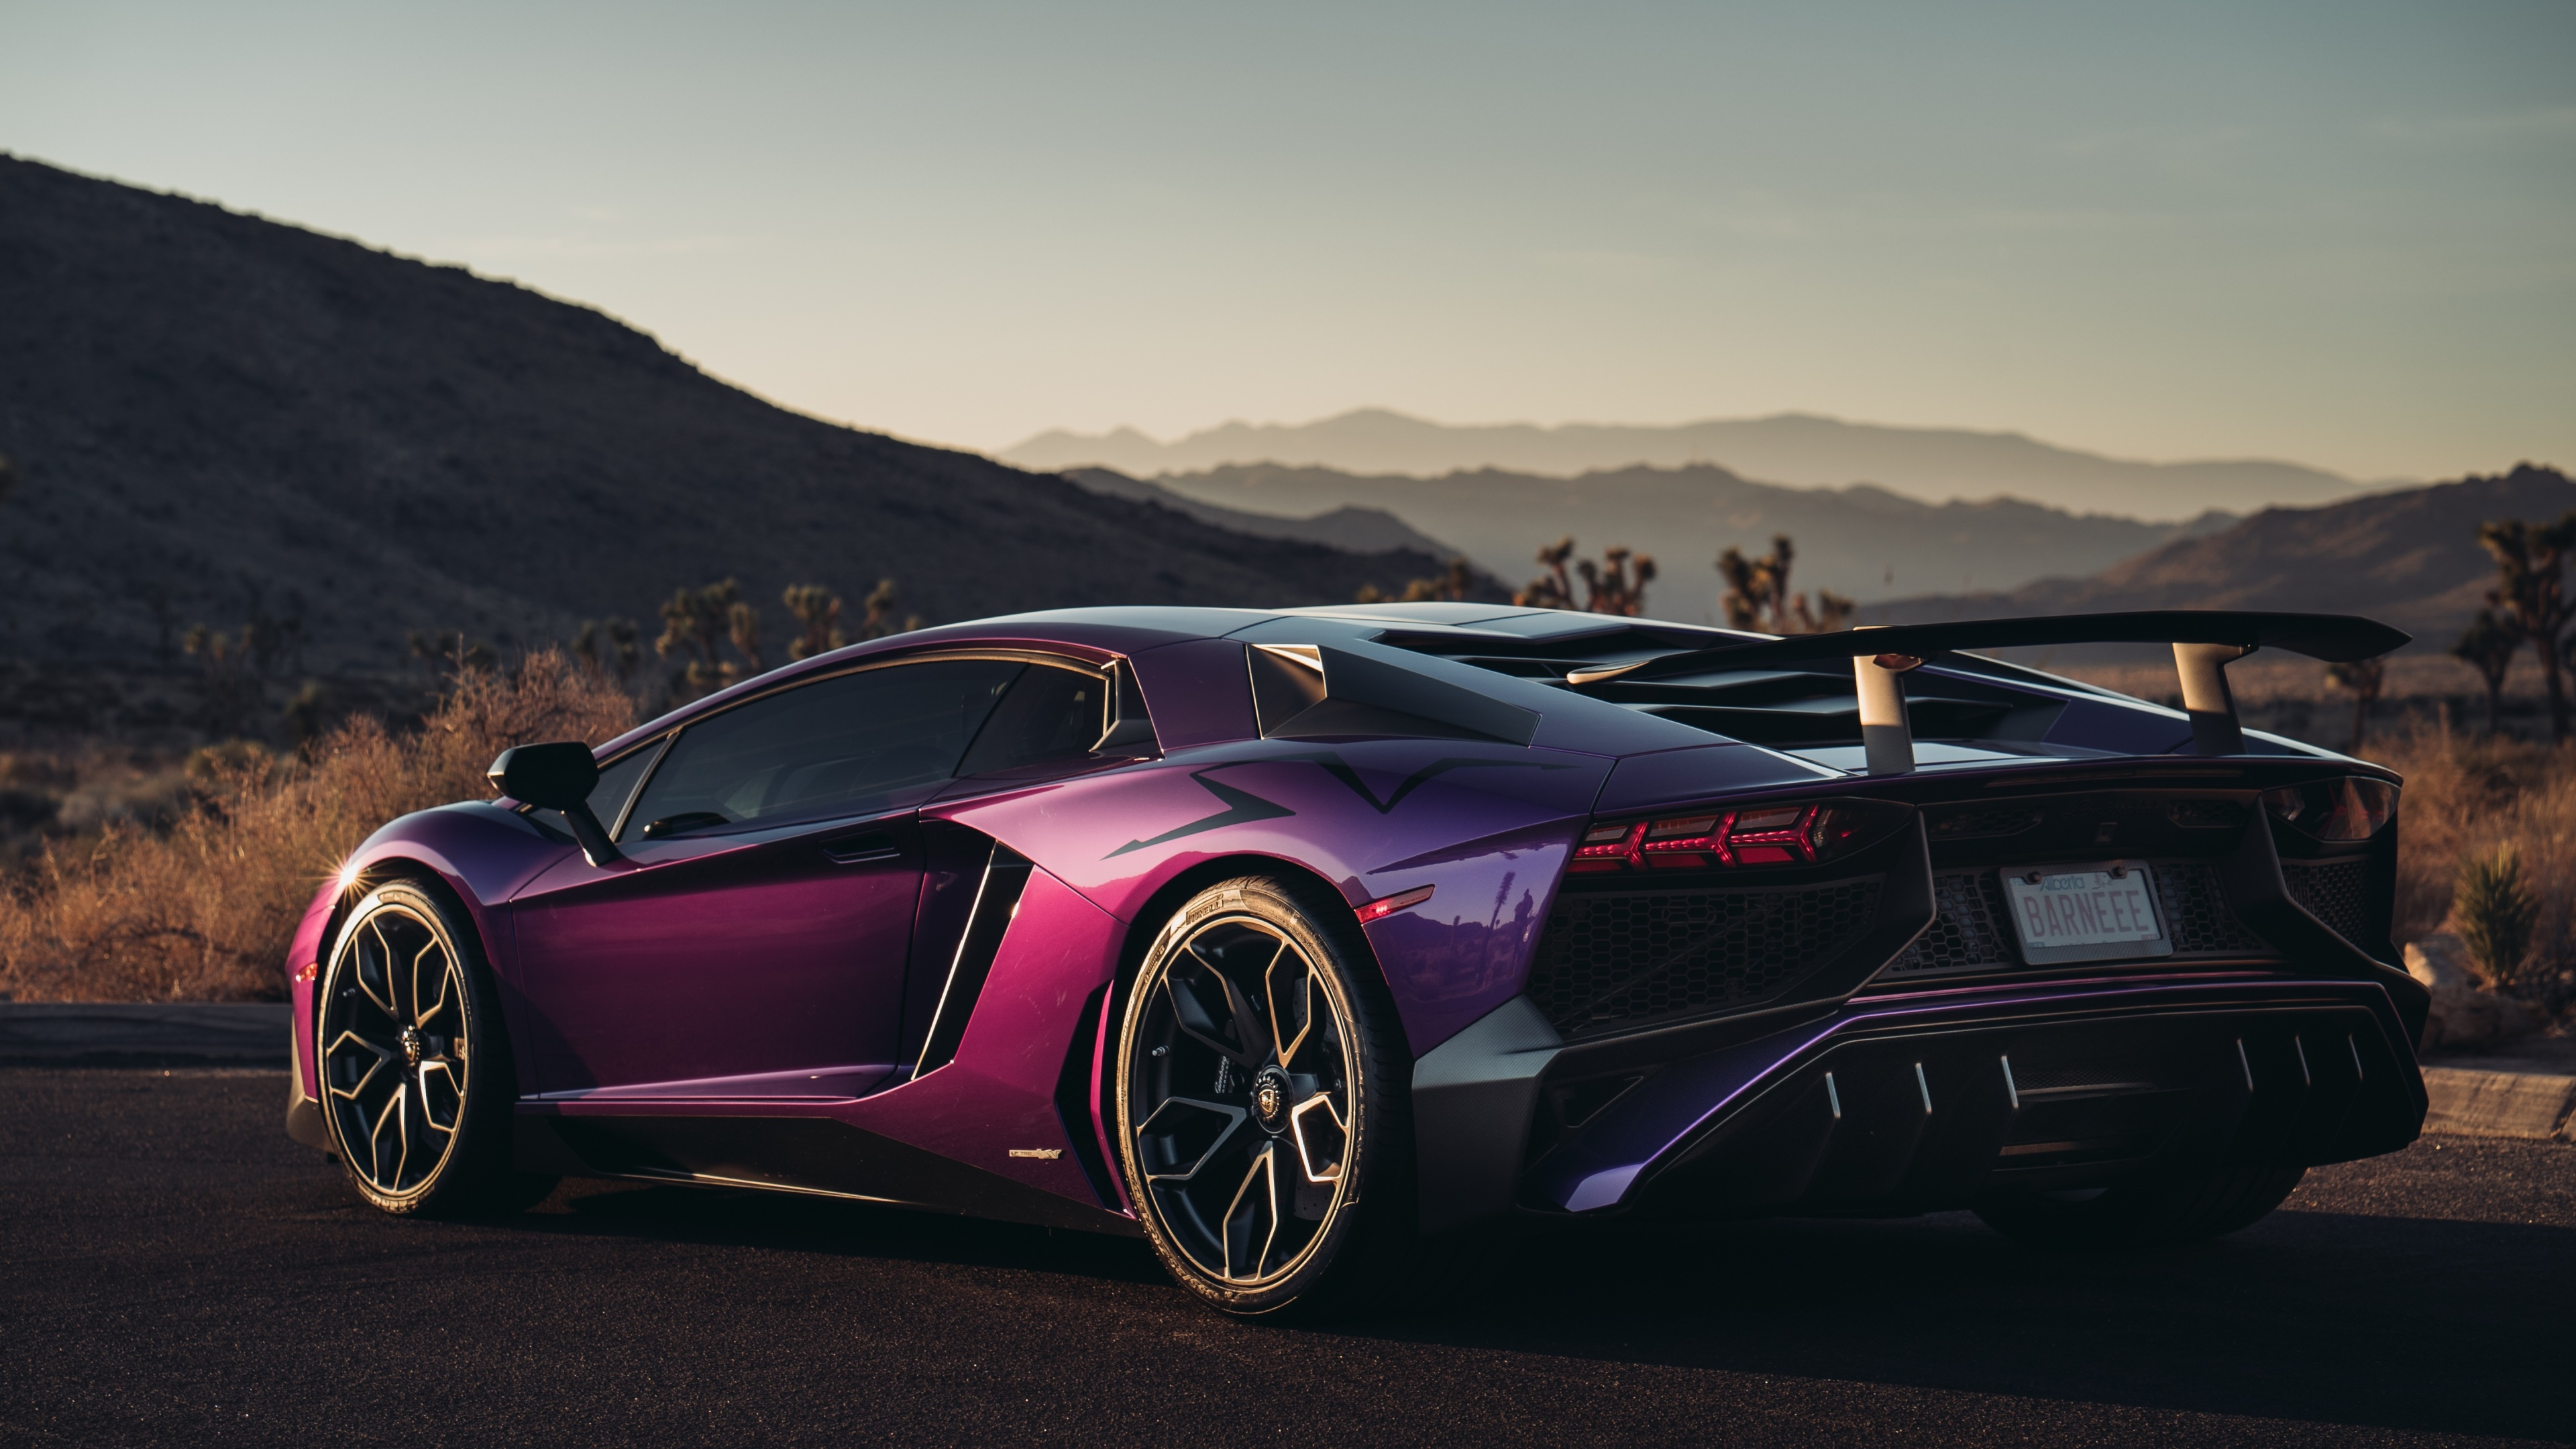 3840x2160 Shiny purple and pink Lamborghini Aventador LP 750-4 SuperVeloce